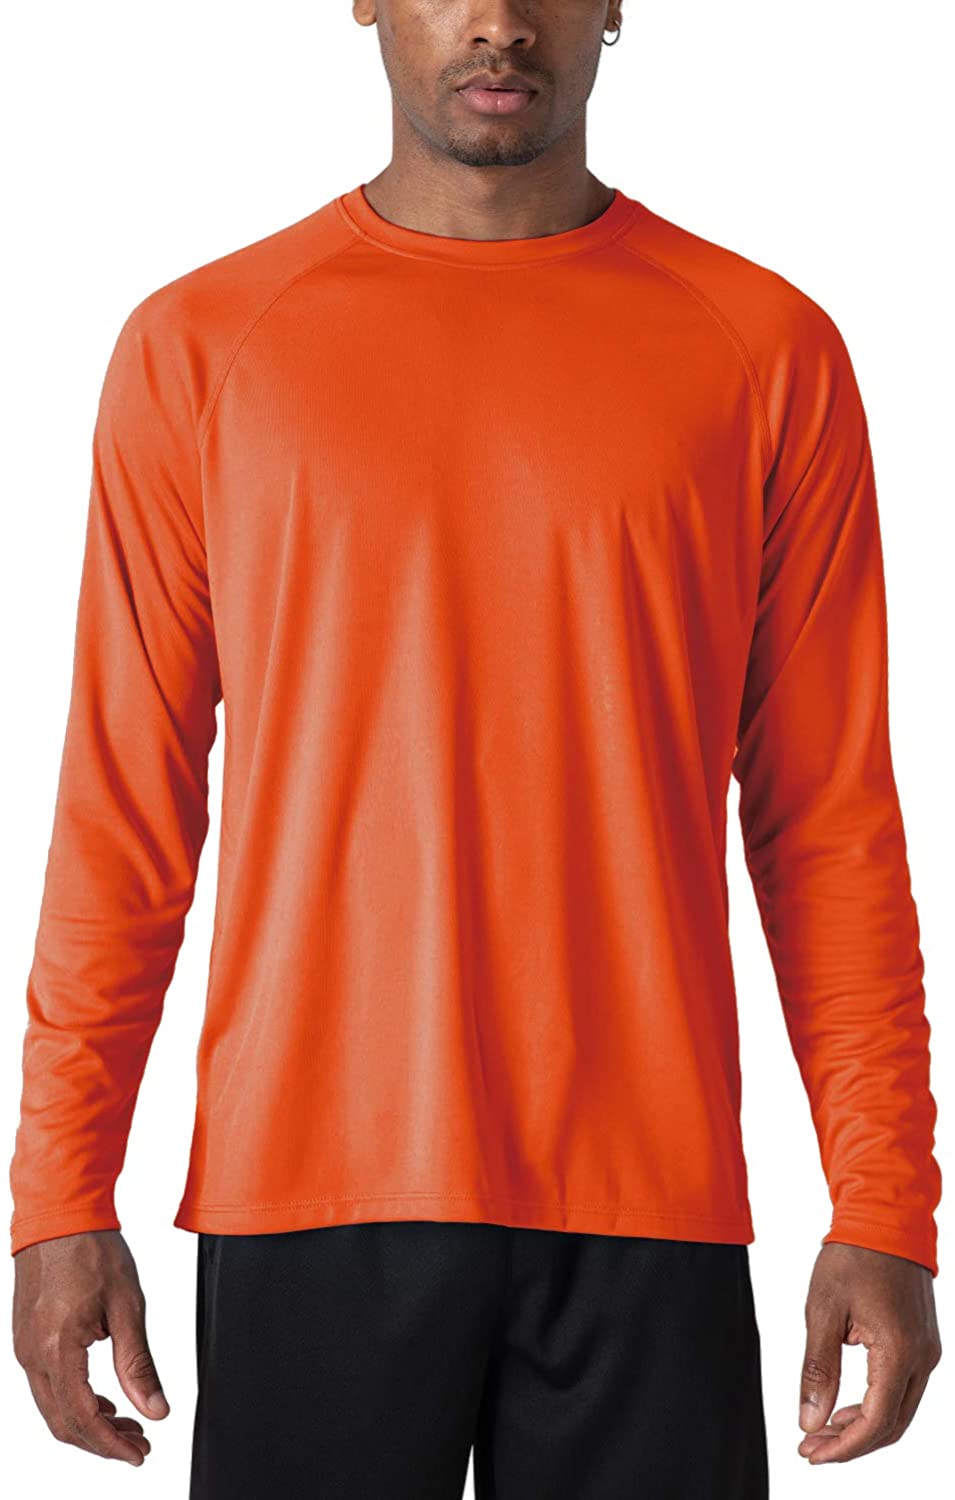 MAGCOMSEN Men's Sun Protection Fishing Workout Athletic Shirts UPF 50+ UV  Long S